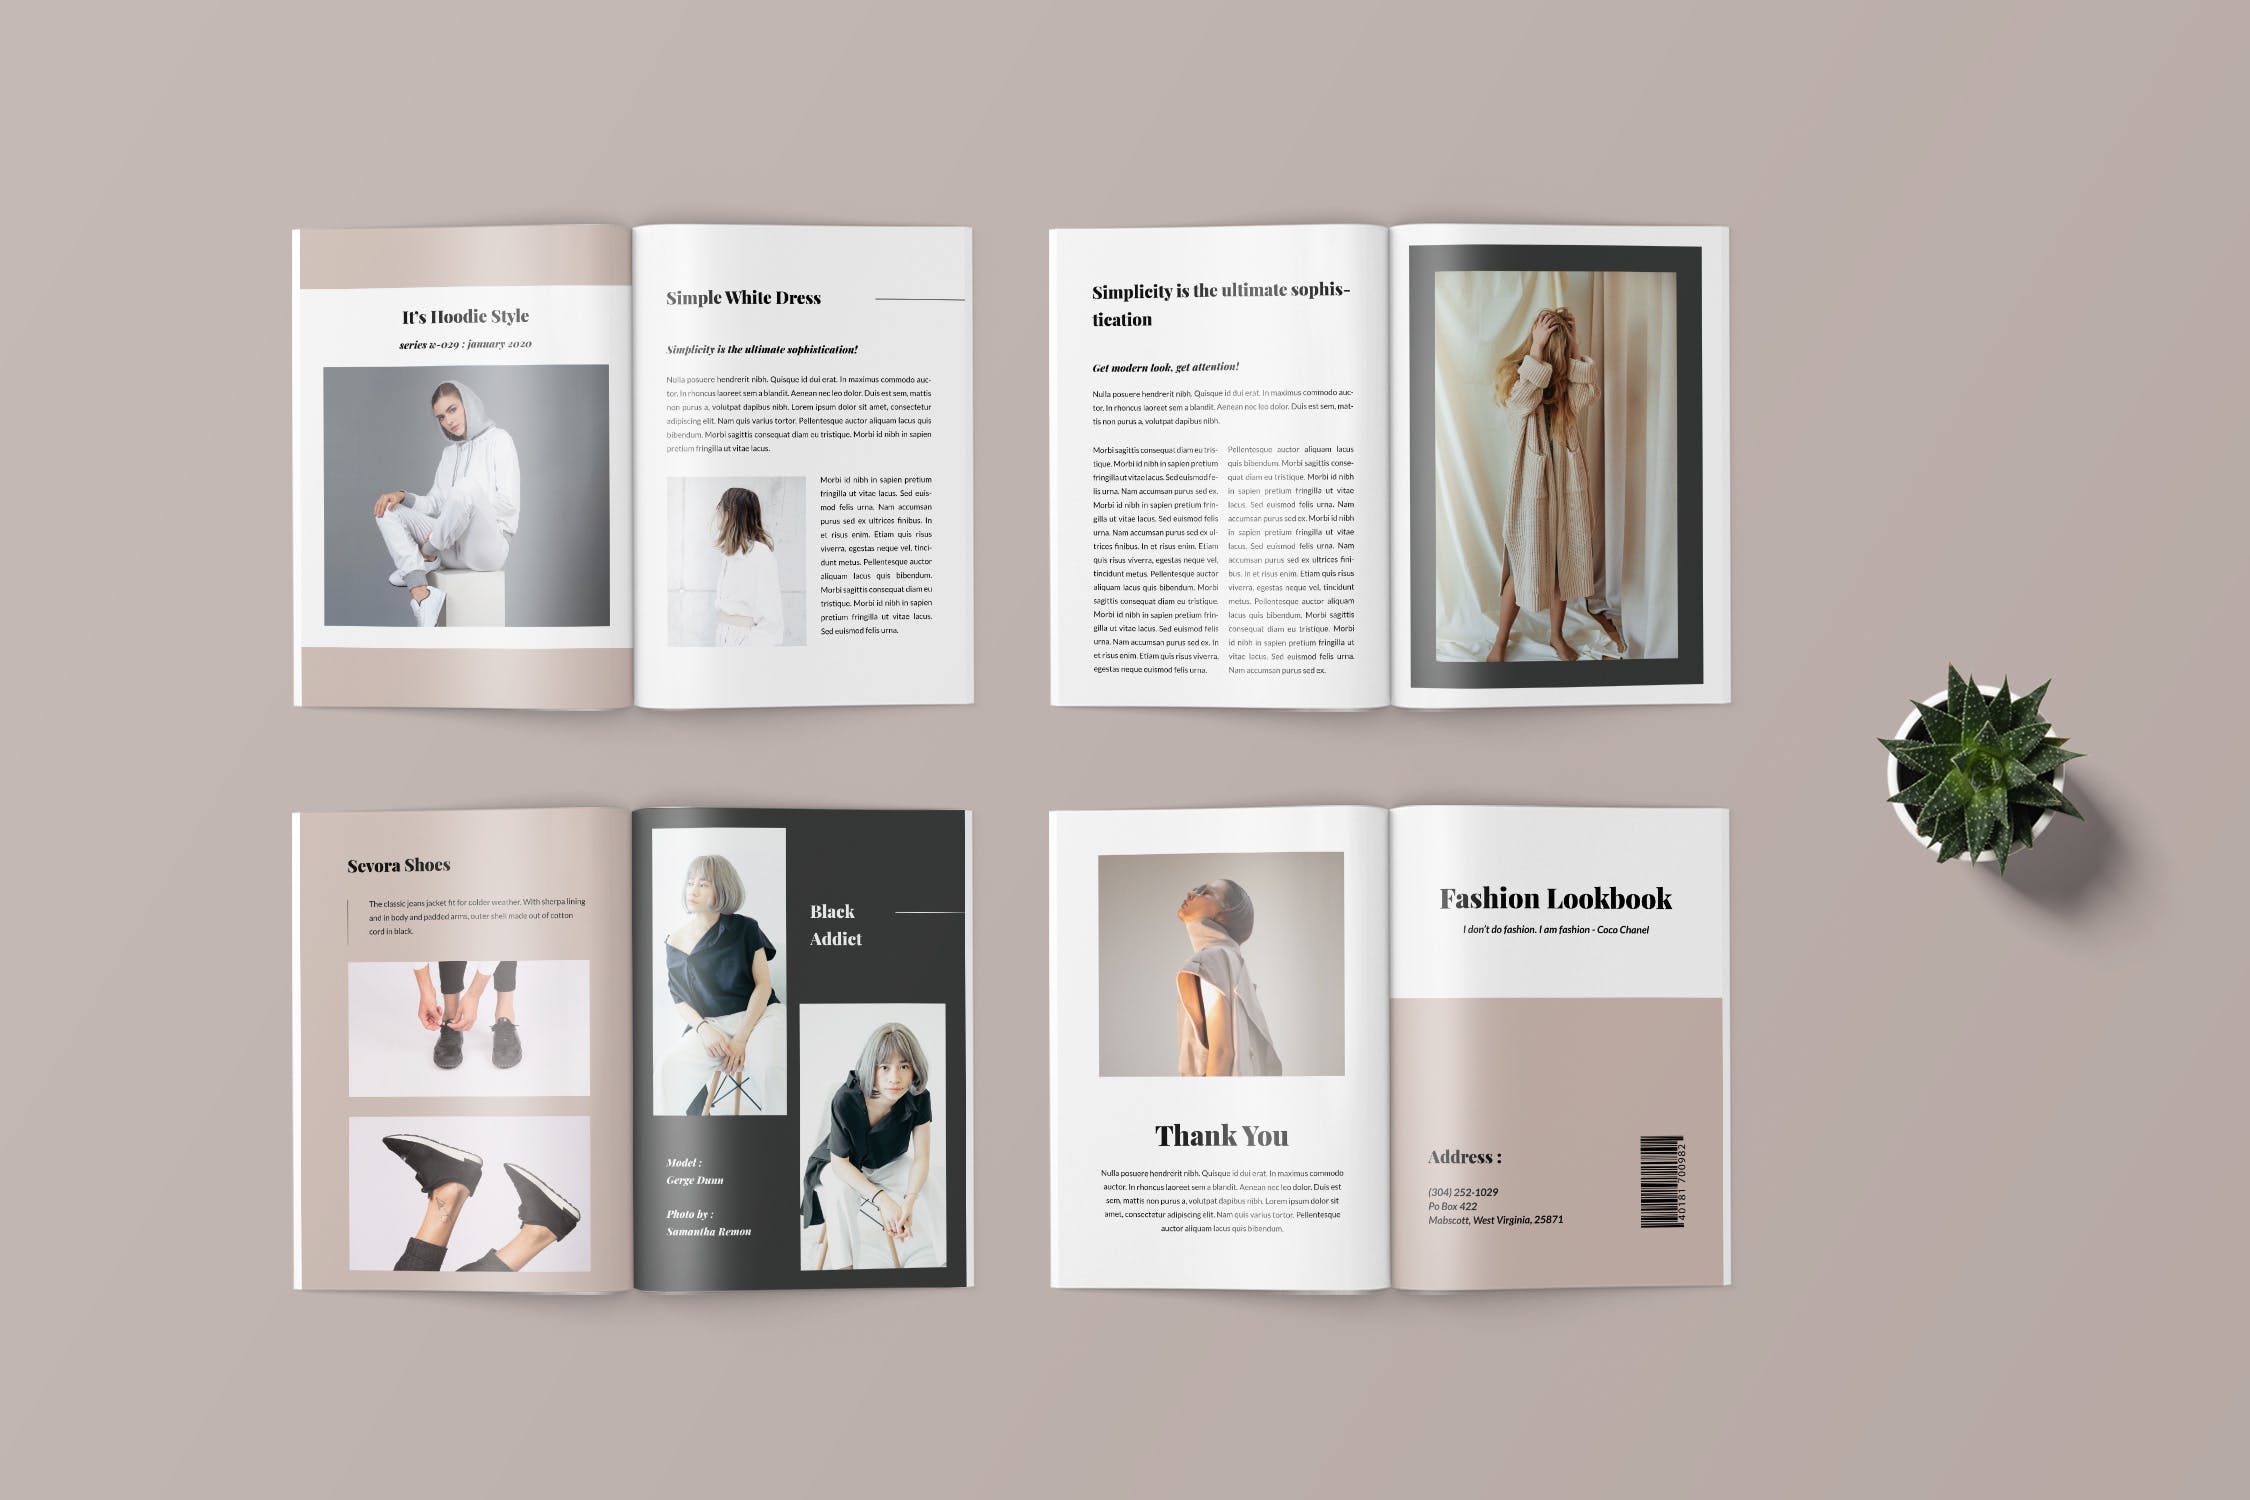 时尚品牌服饰产品手册/产品画册设计模板 Fashion Lookbook Catalogue插图(3)